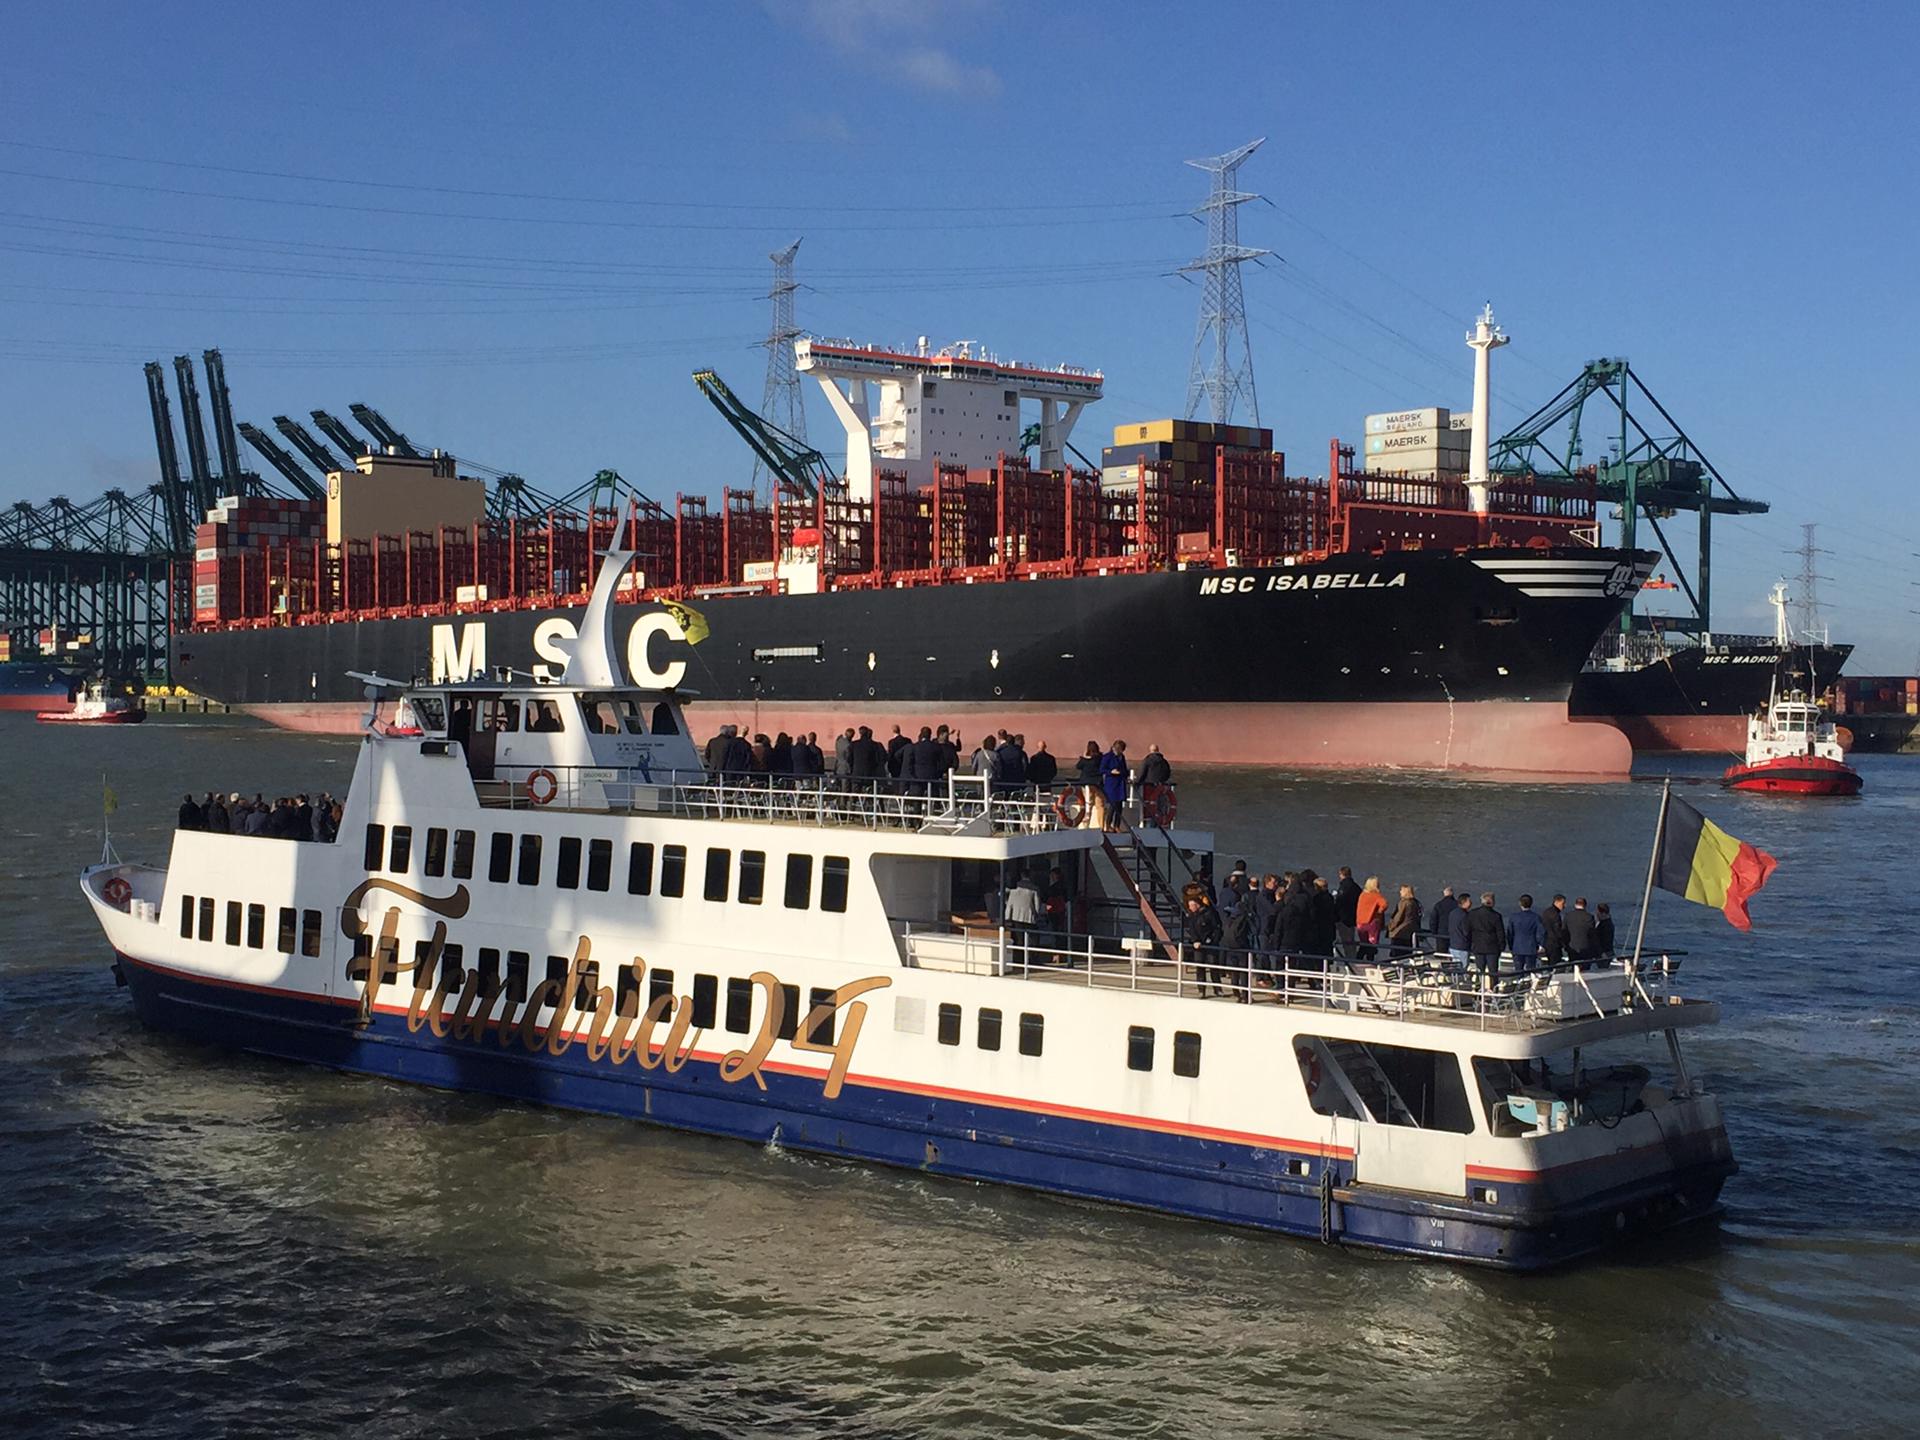 Cruise: Port of Antwerp (2h)